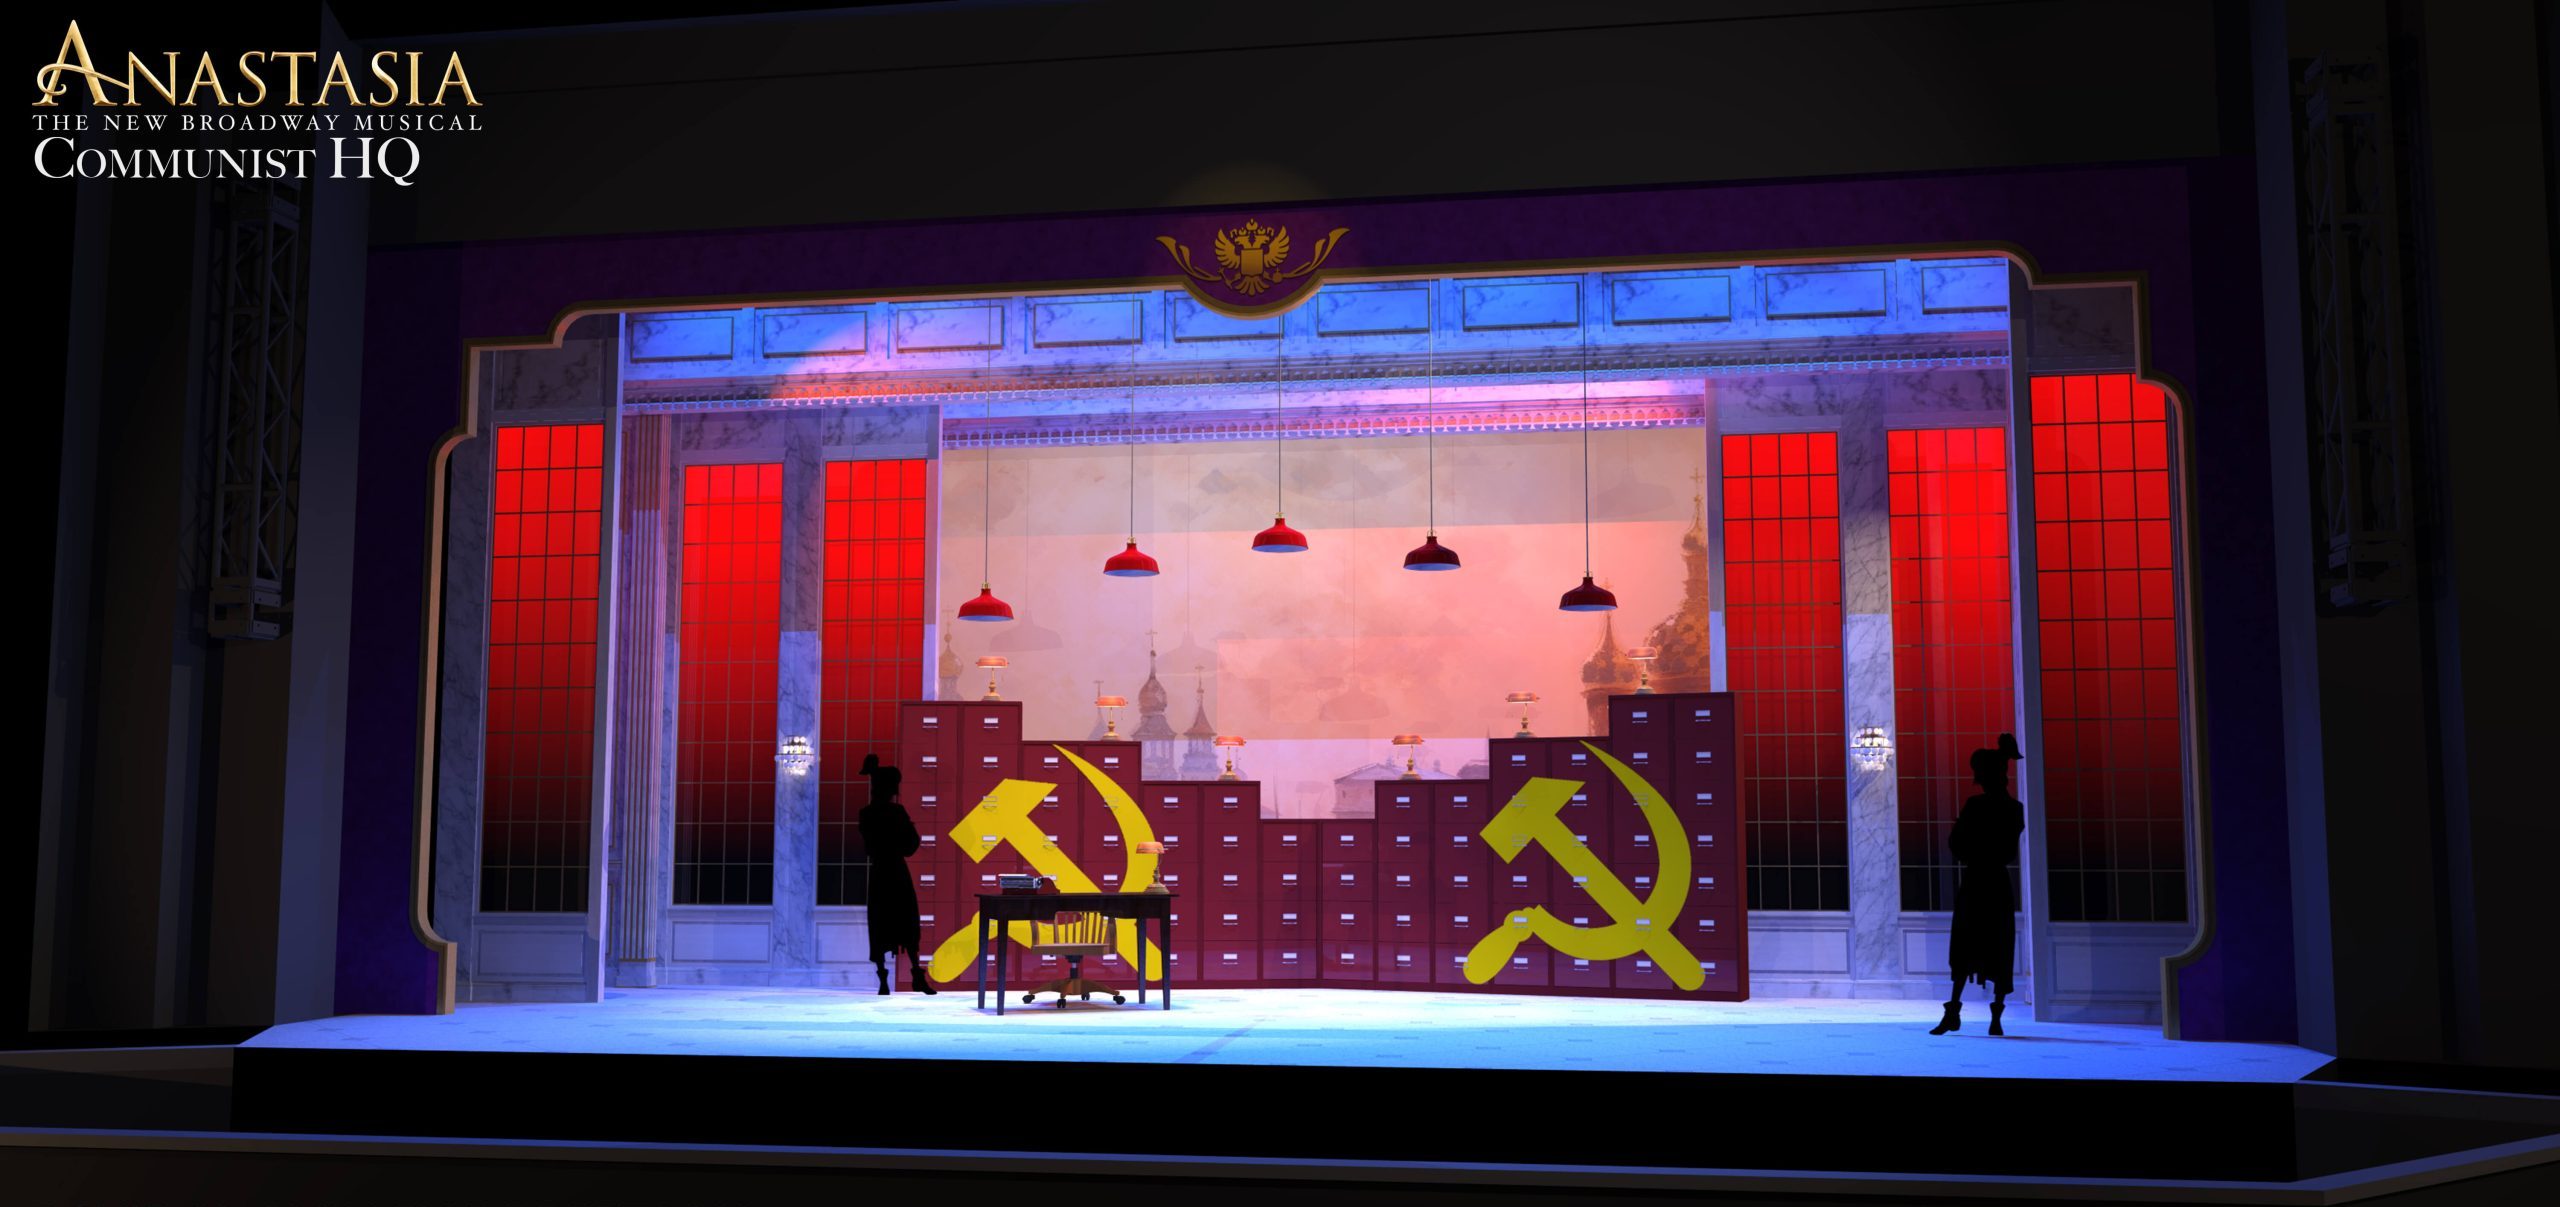 Anastasia scenery rental - Communist HQ musical scene - Front Row Theatrical Rental